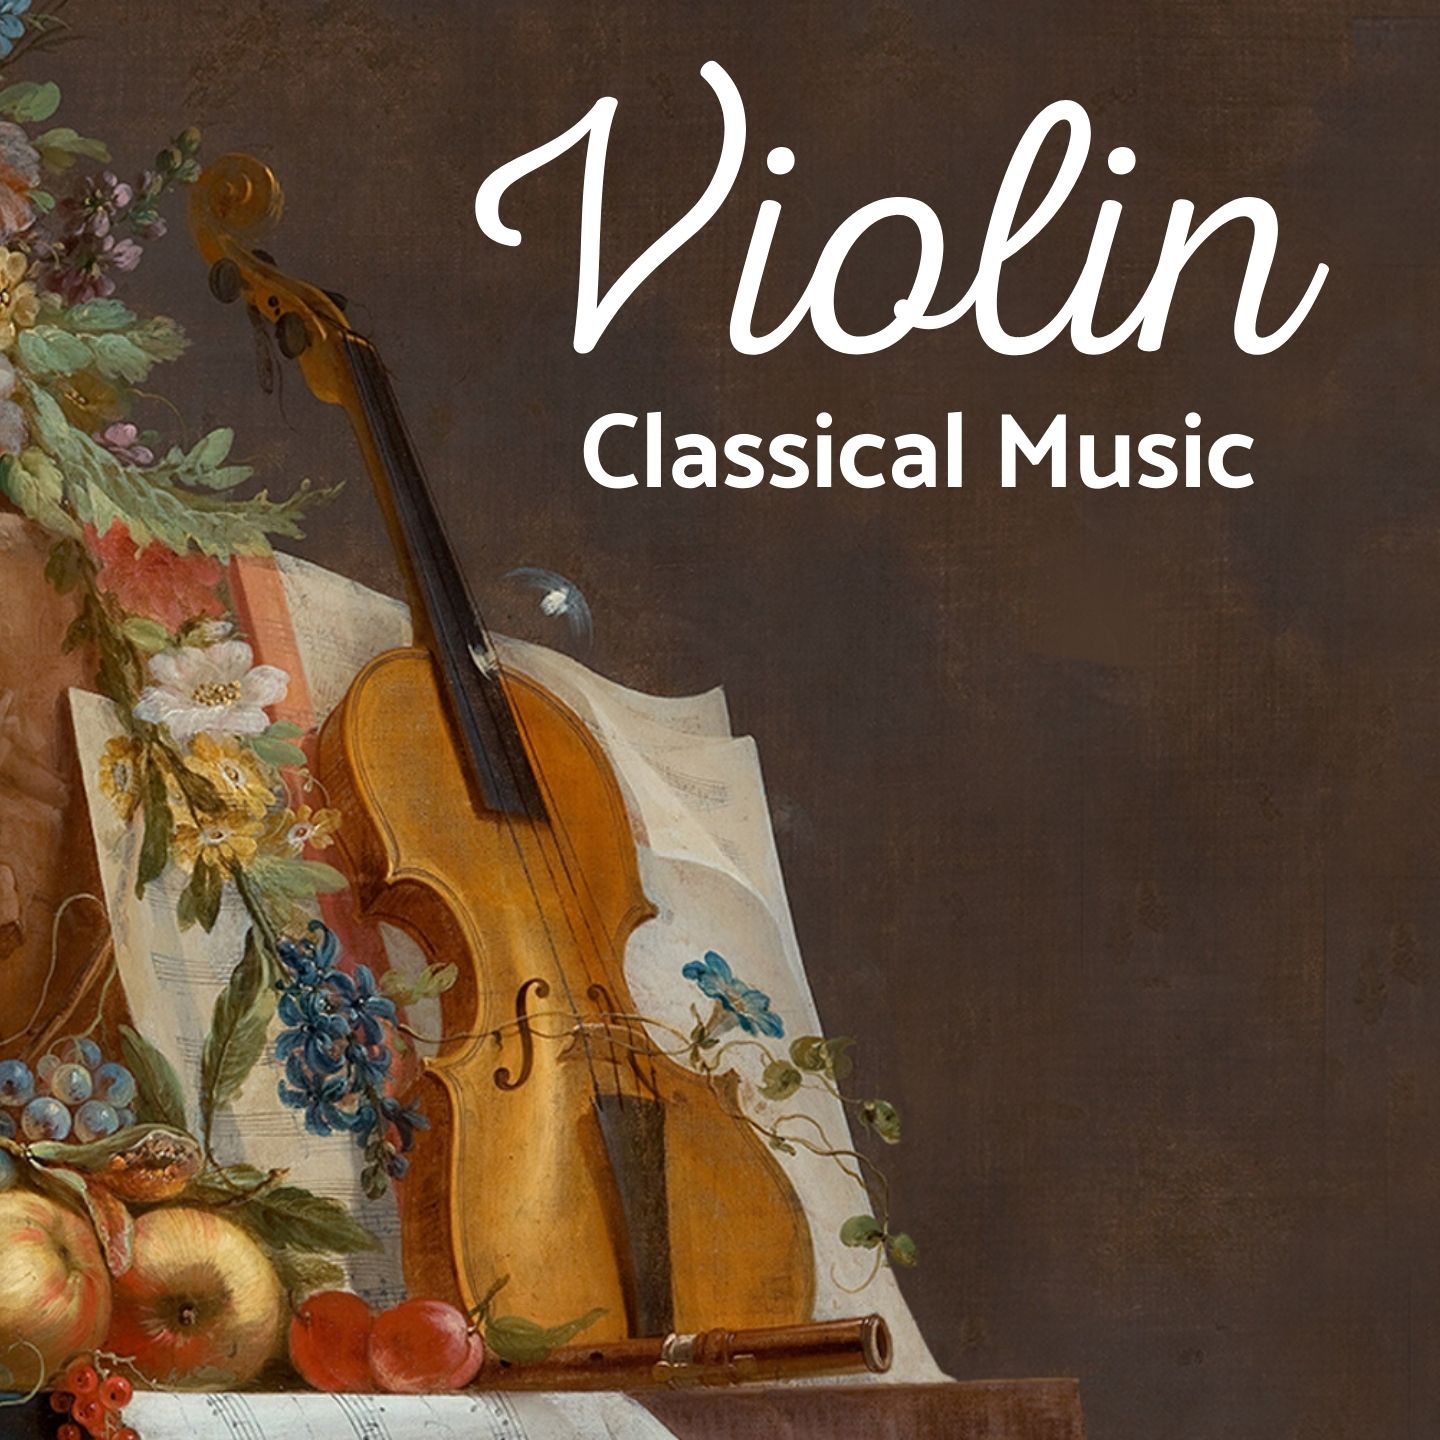 Classical Music - Violin